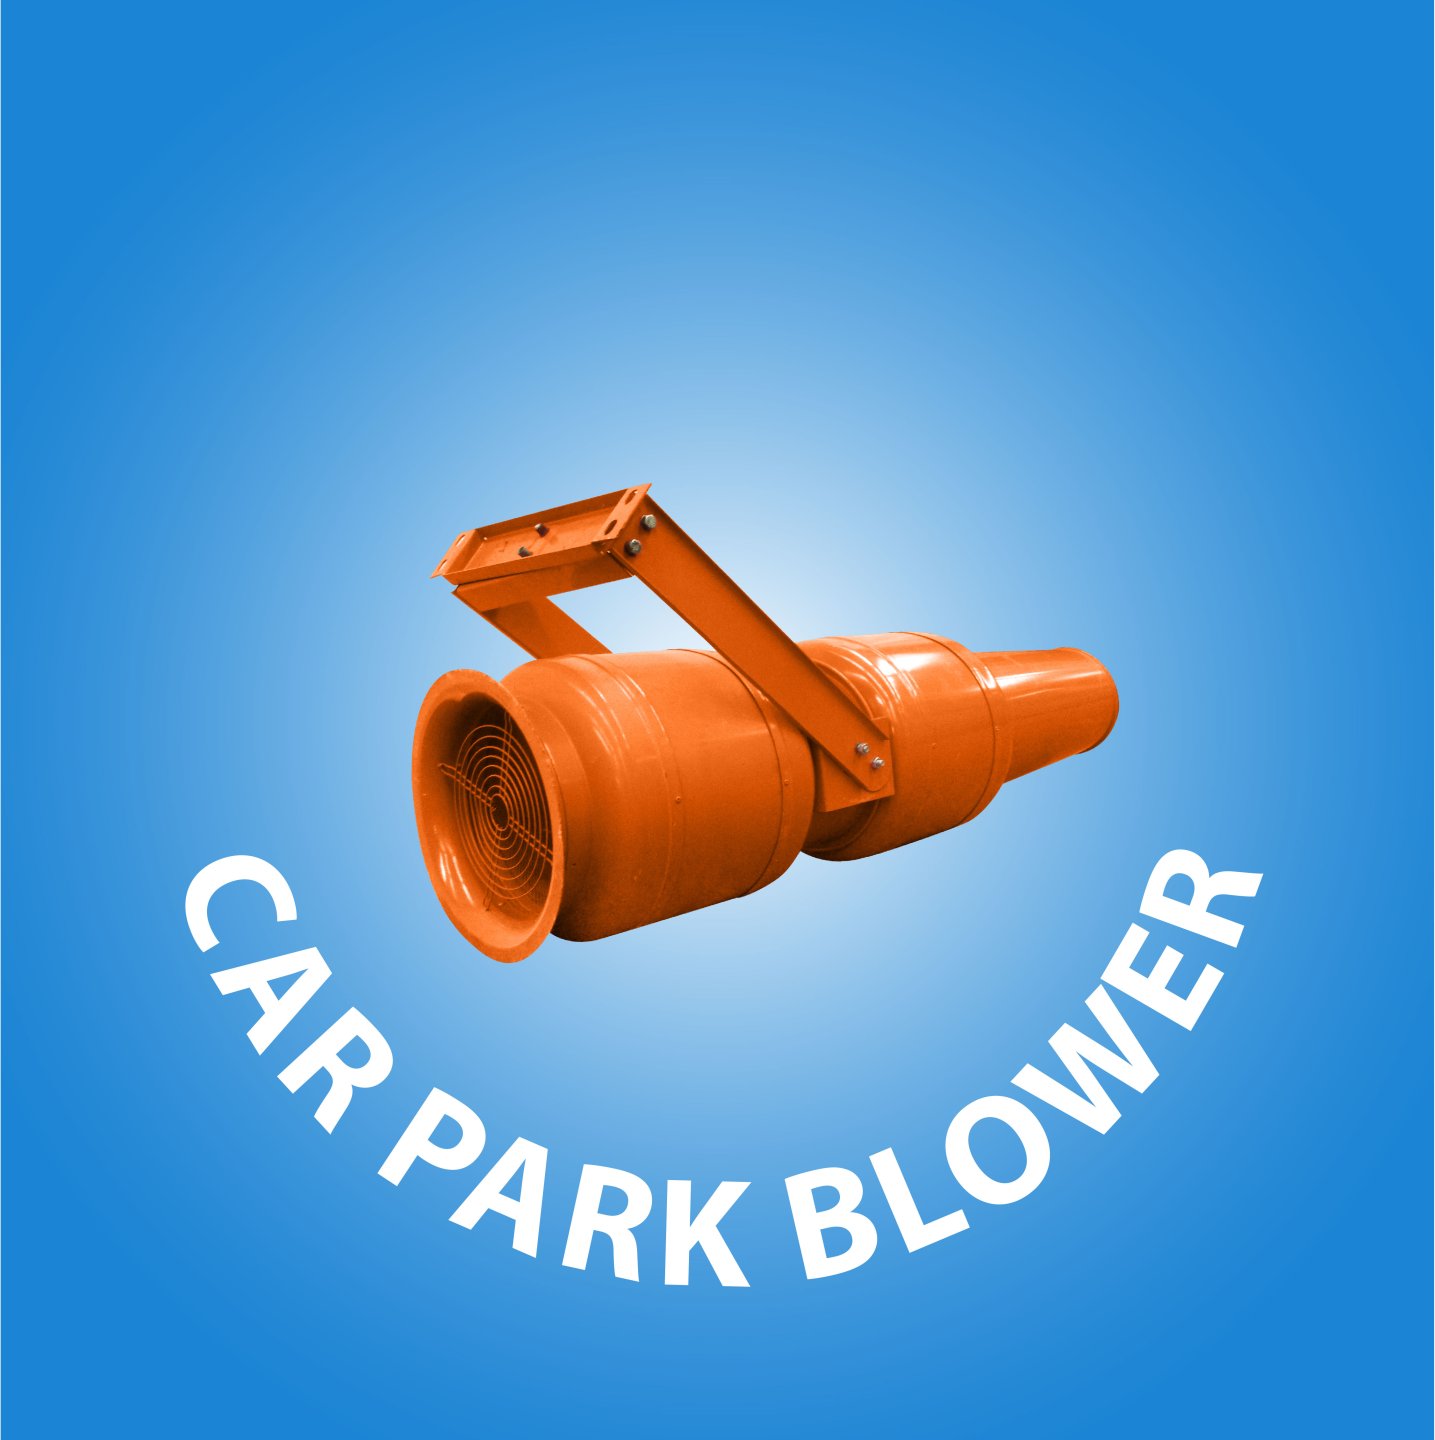  Car Park Blower cover kategori website 09